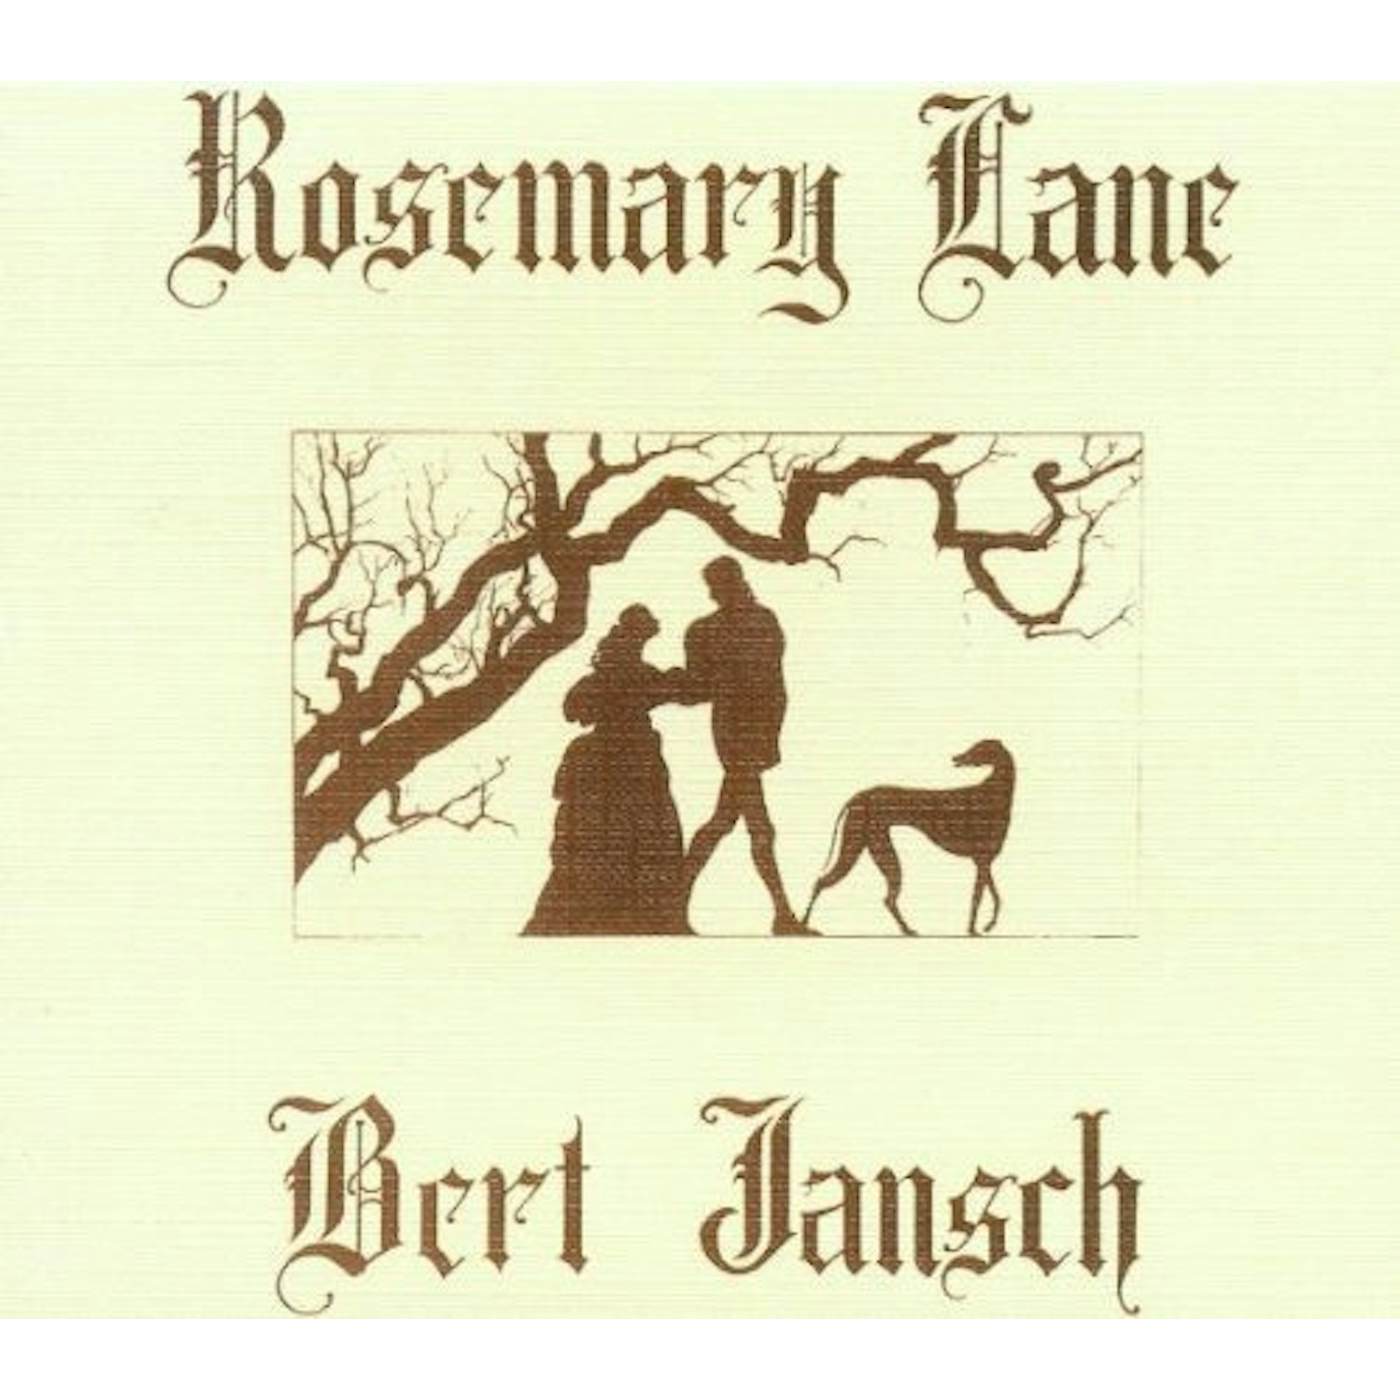 Bert Jansch Rosemary Lane Vinyl Record